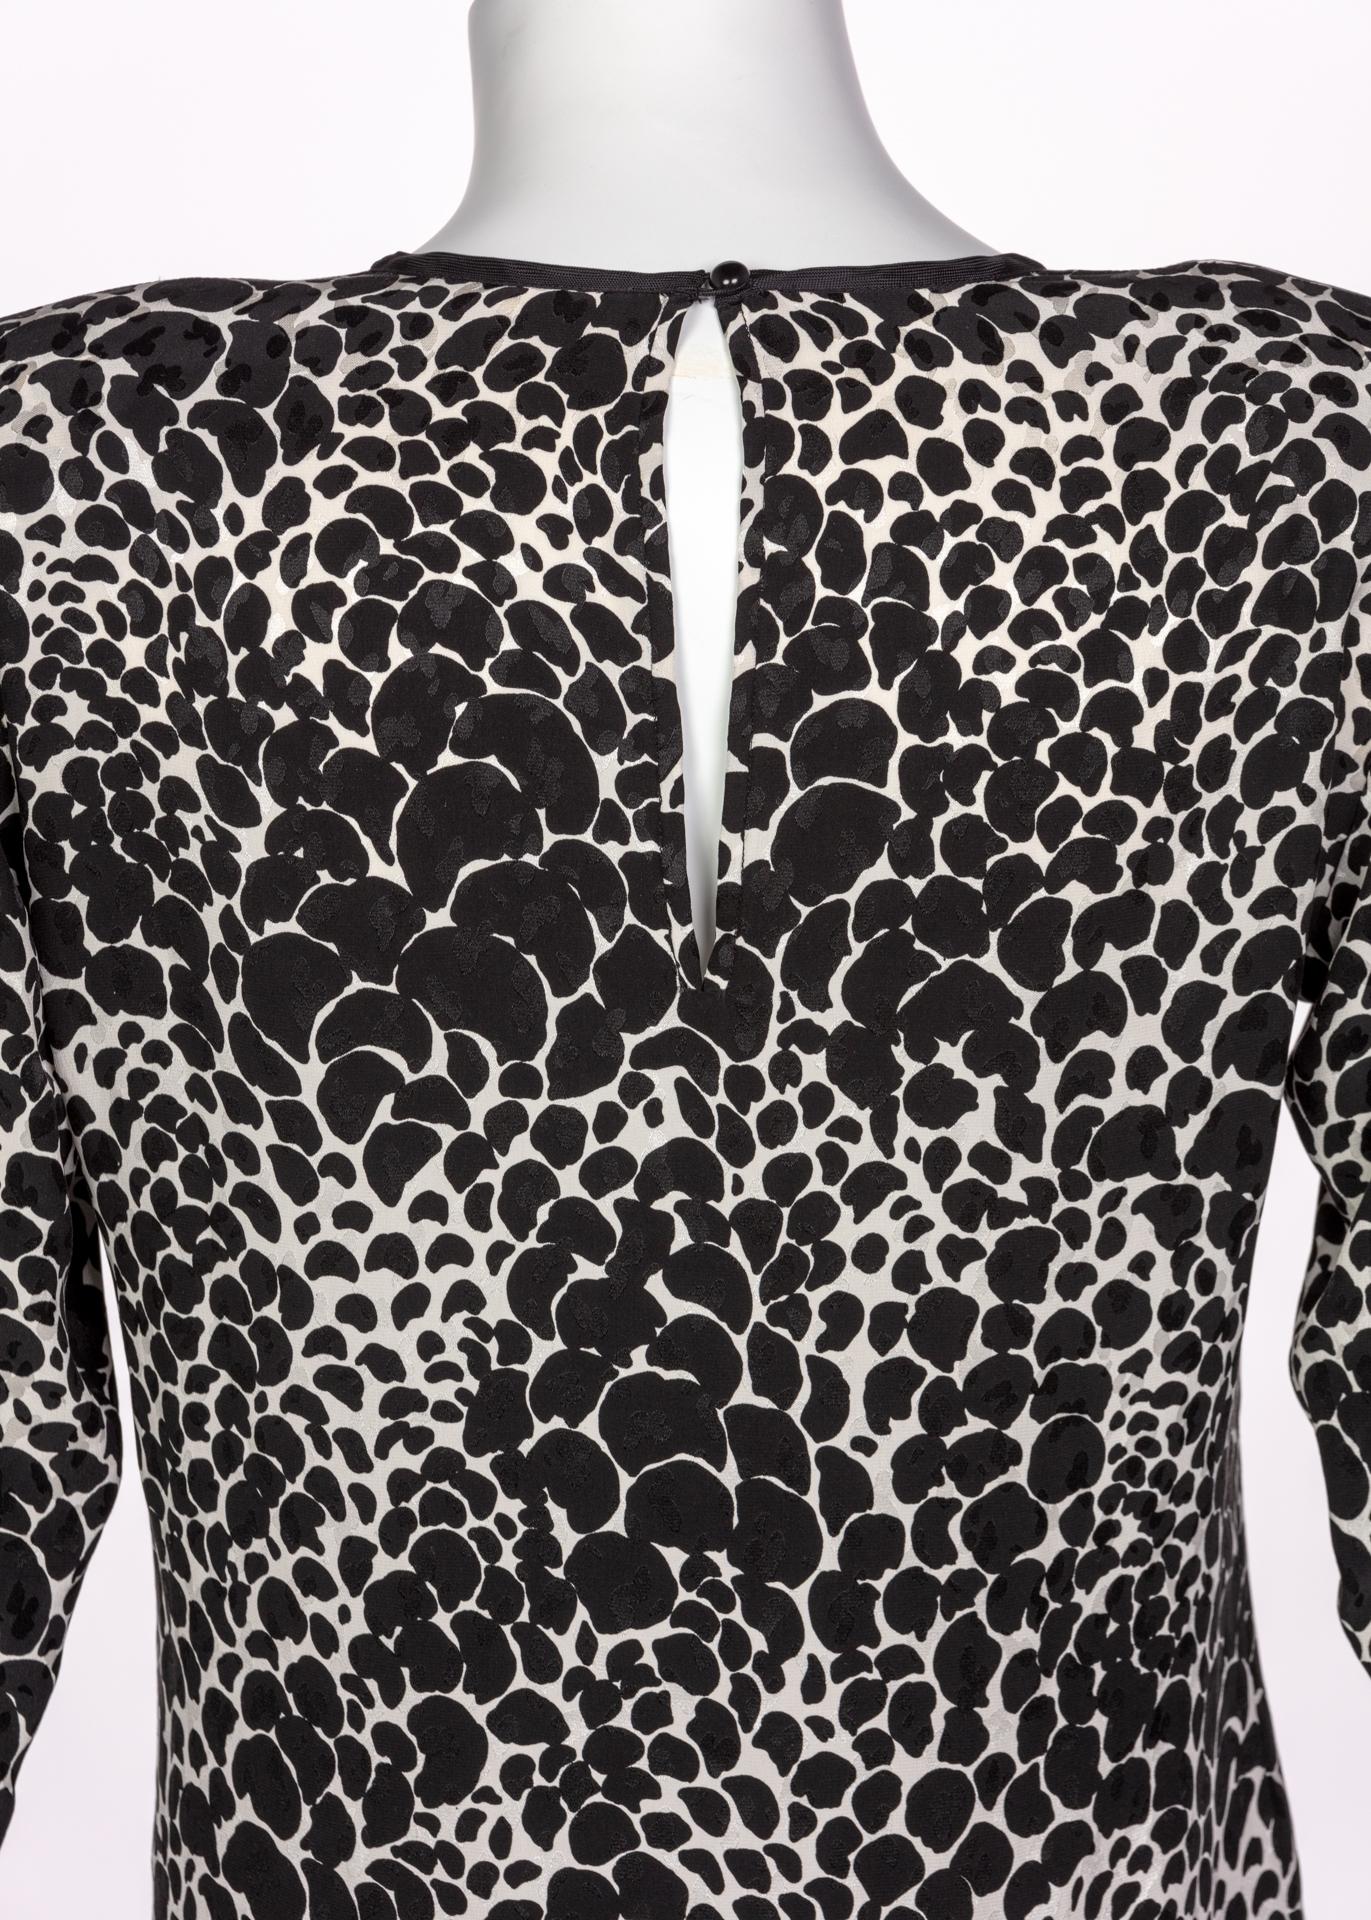 Yves Saint Laurent YSL Black White Silk Print Blouse Top, 1970s For Sale 1